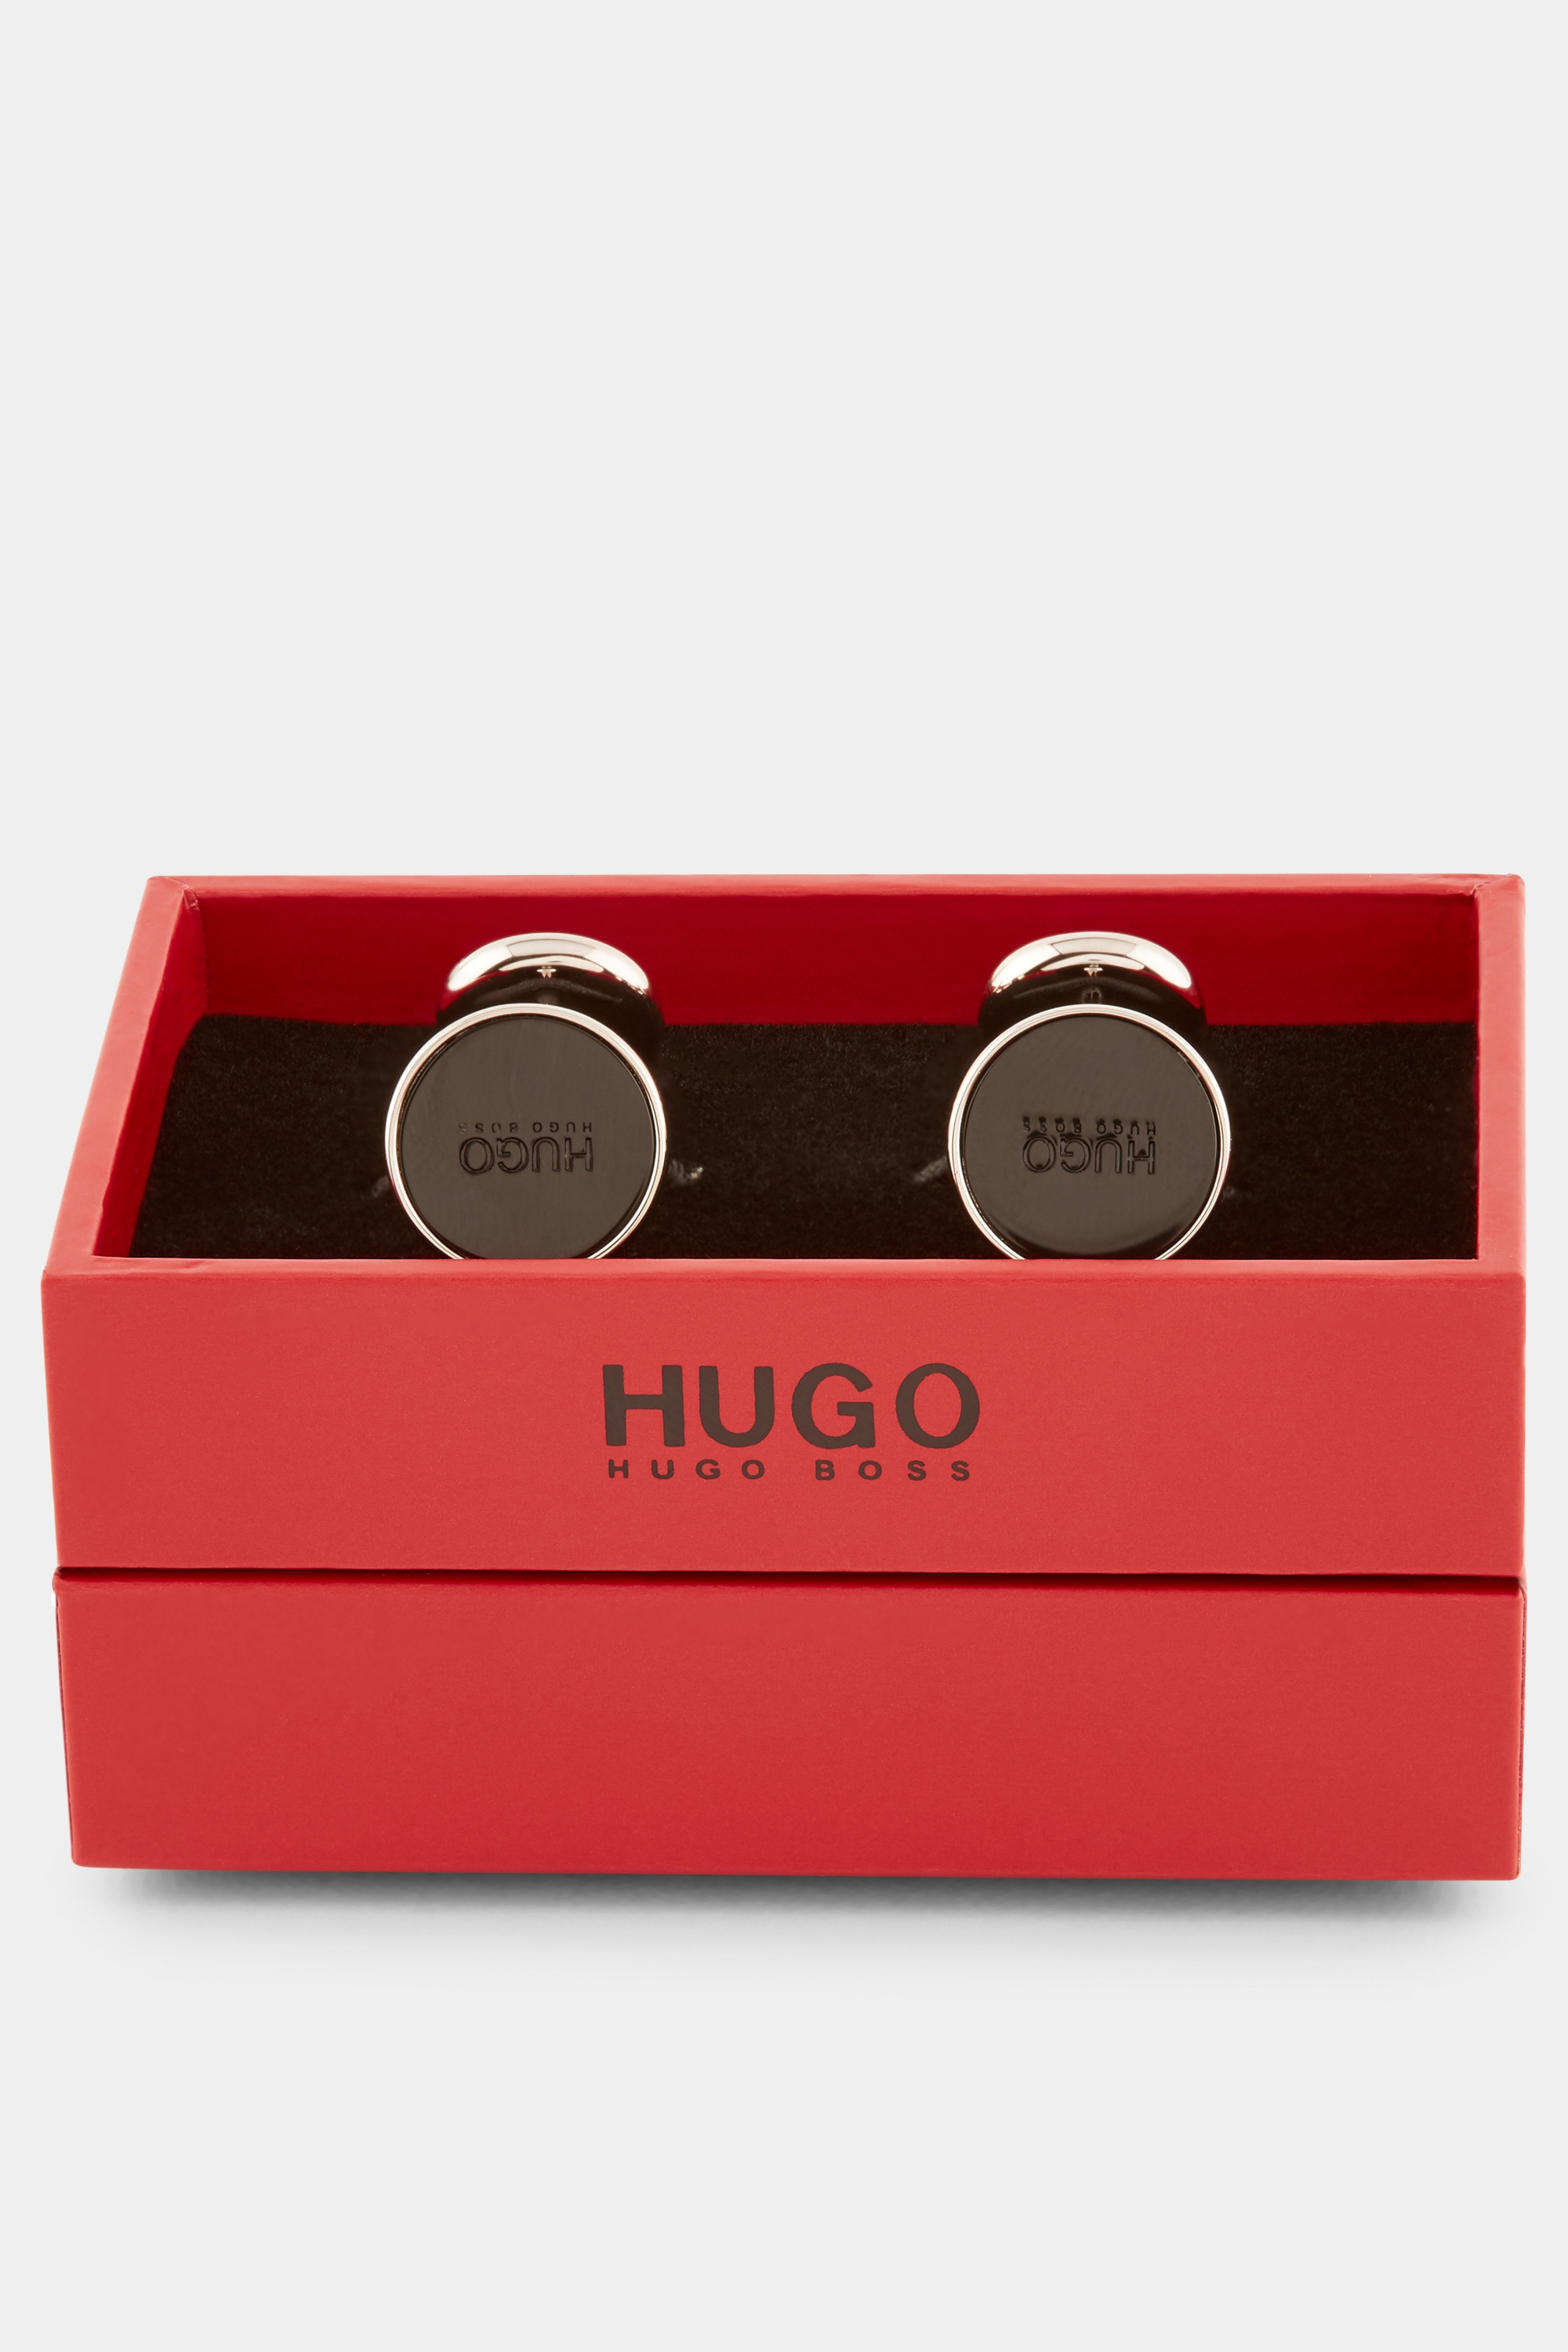 hugo boss cufflinks uk